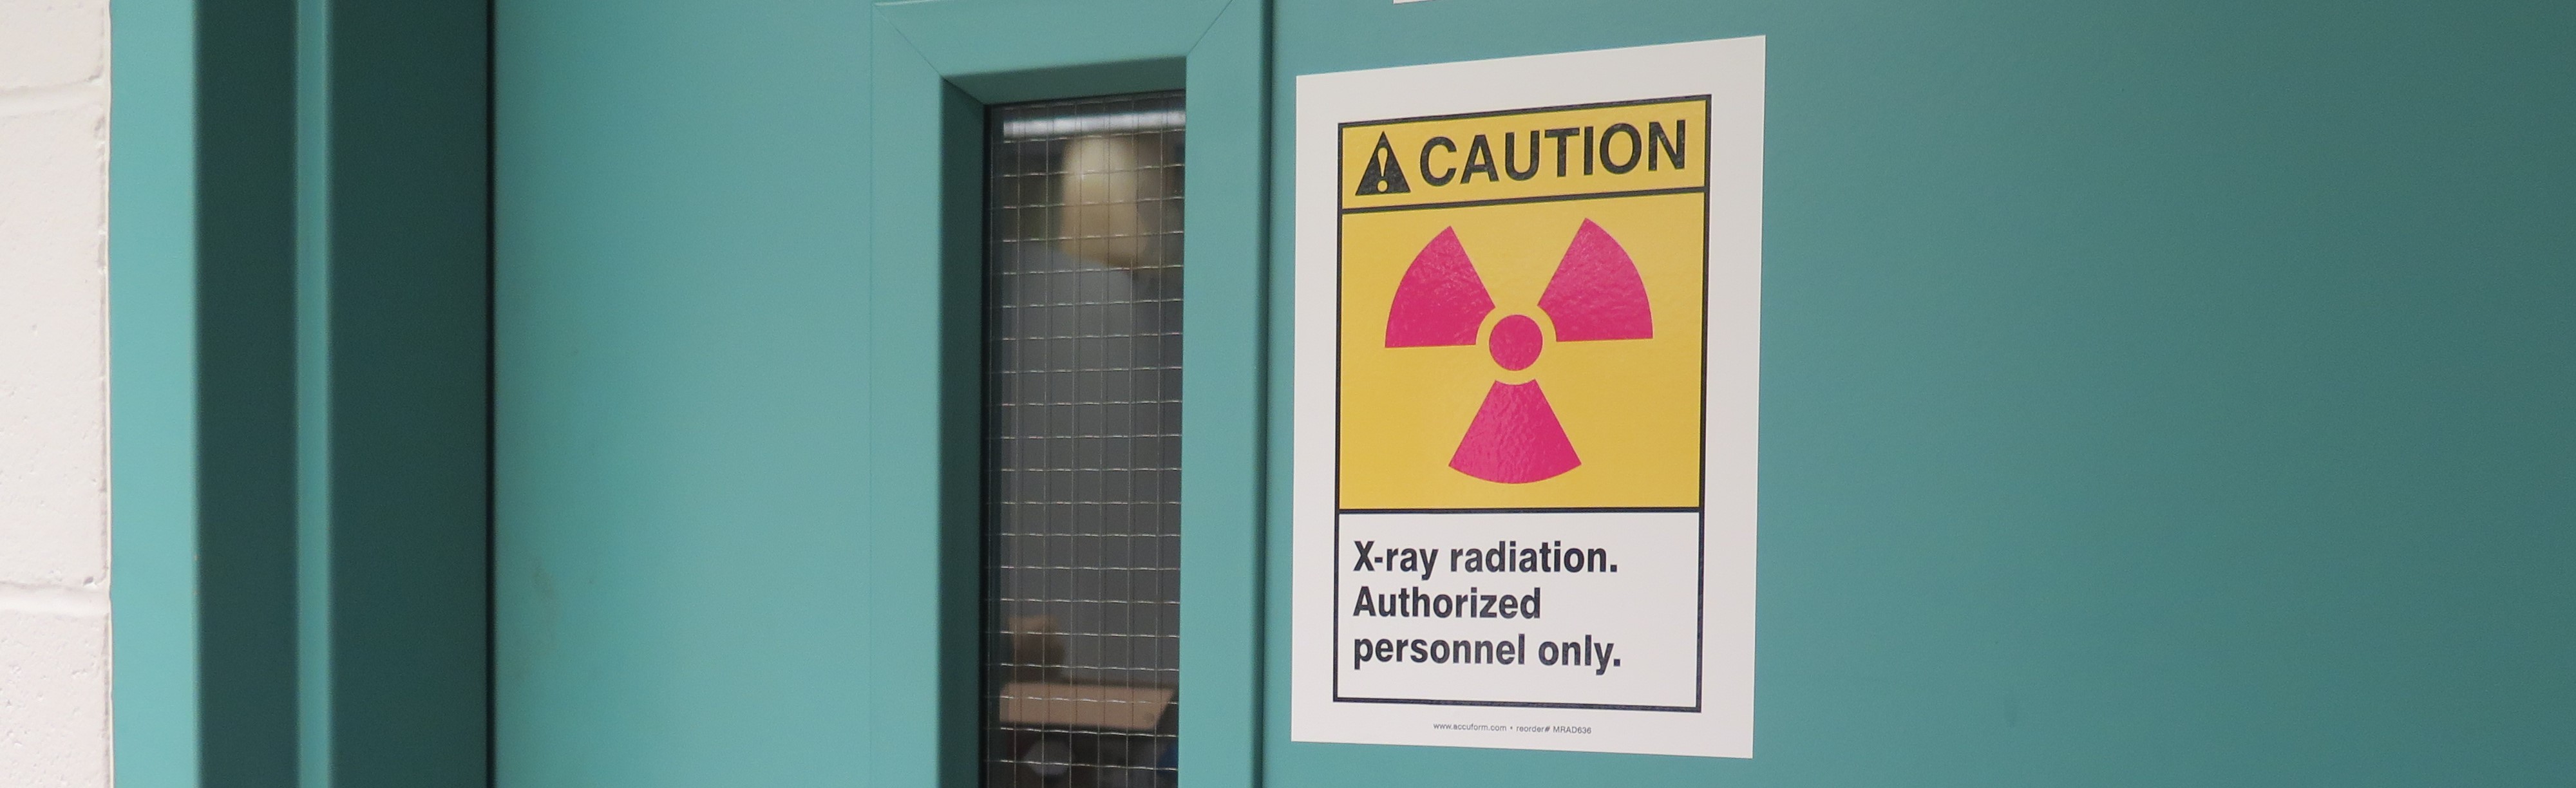 X-ray radiation caution sign